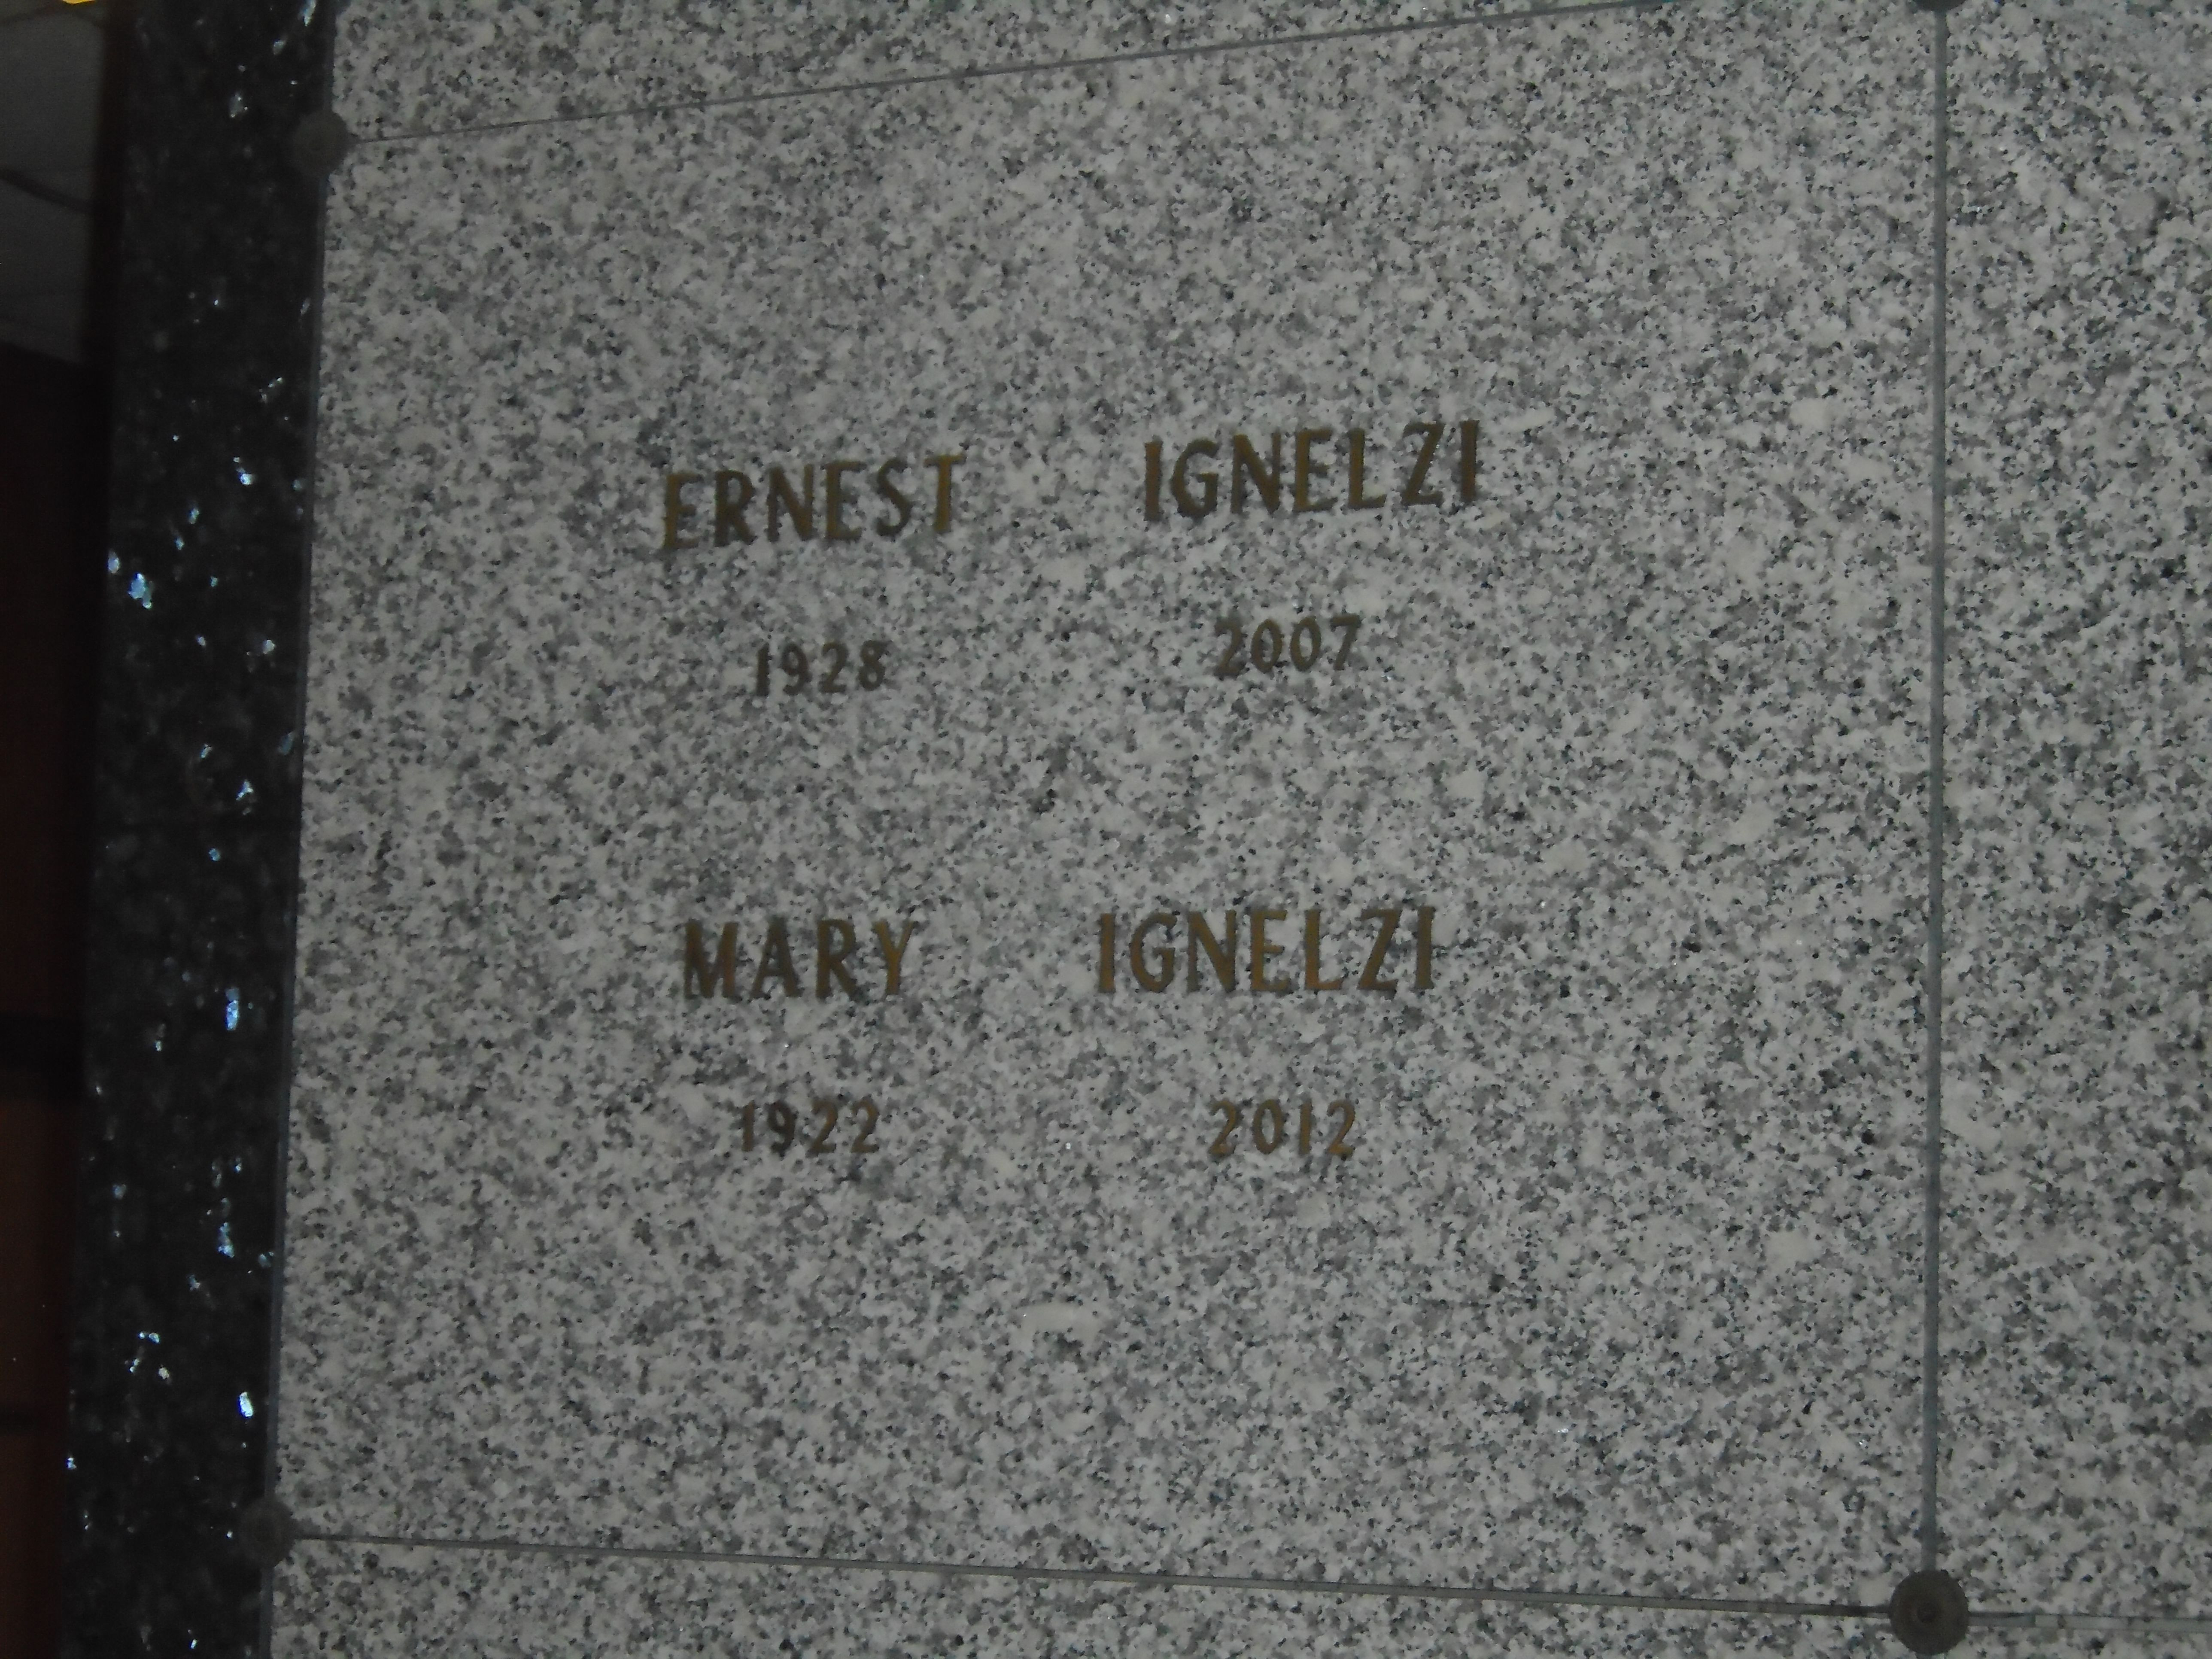 Ernest A. Ignelzi Gravesite